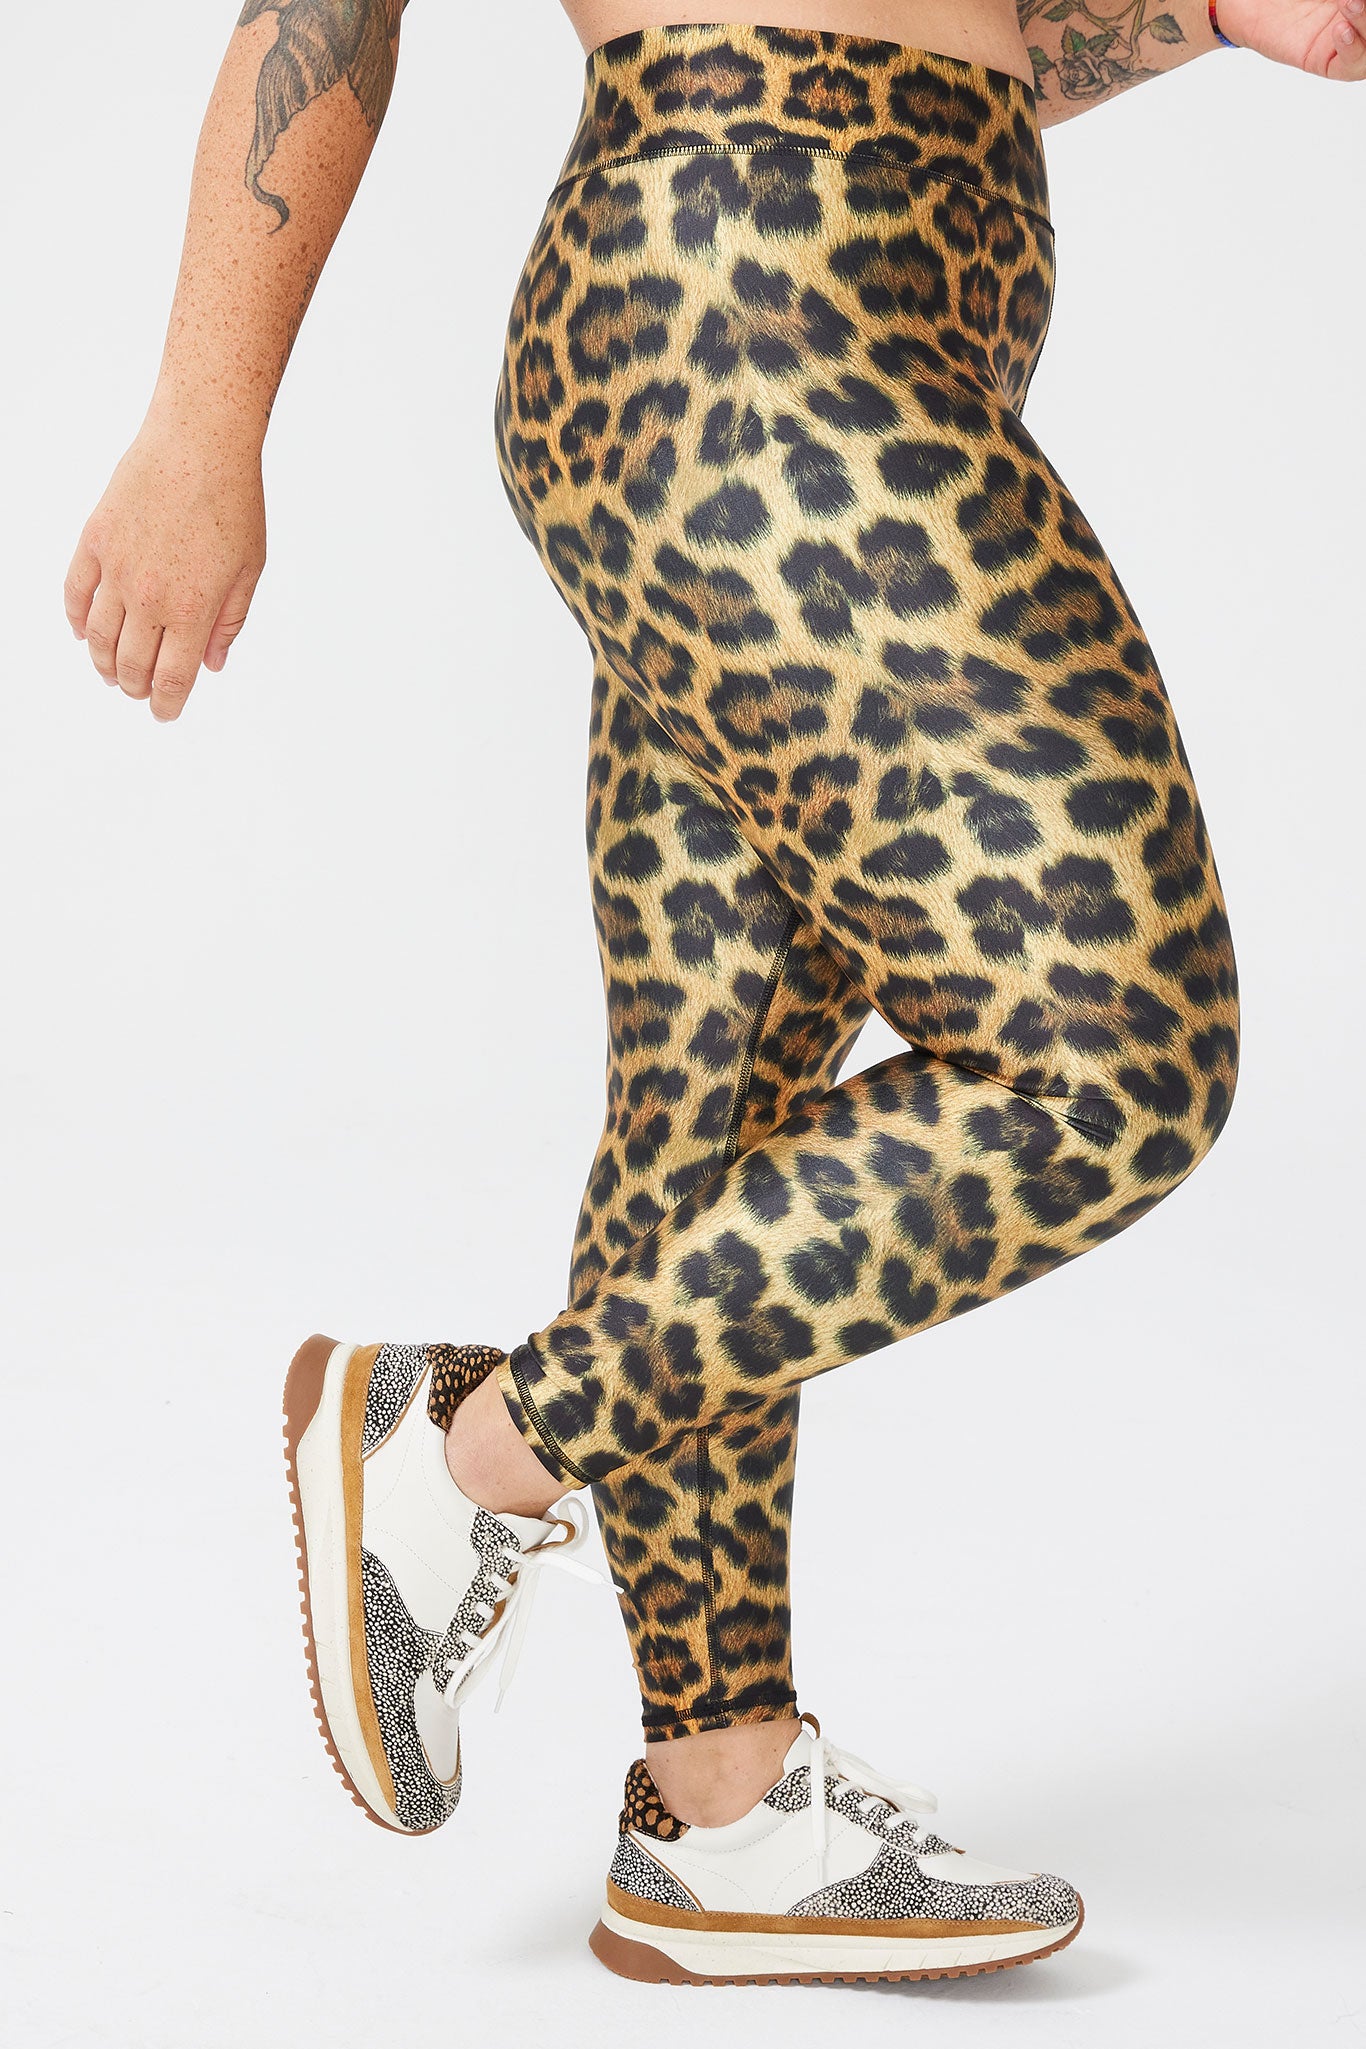 OSNCG Women Leggings Trousers Elastic Waisted Yoga Pants Leopard